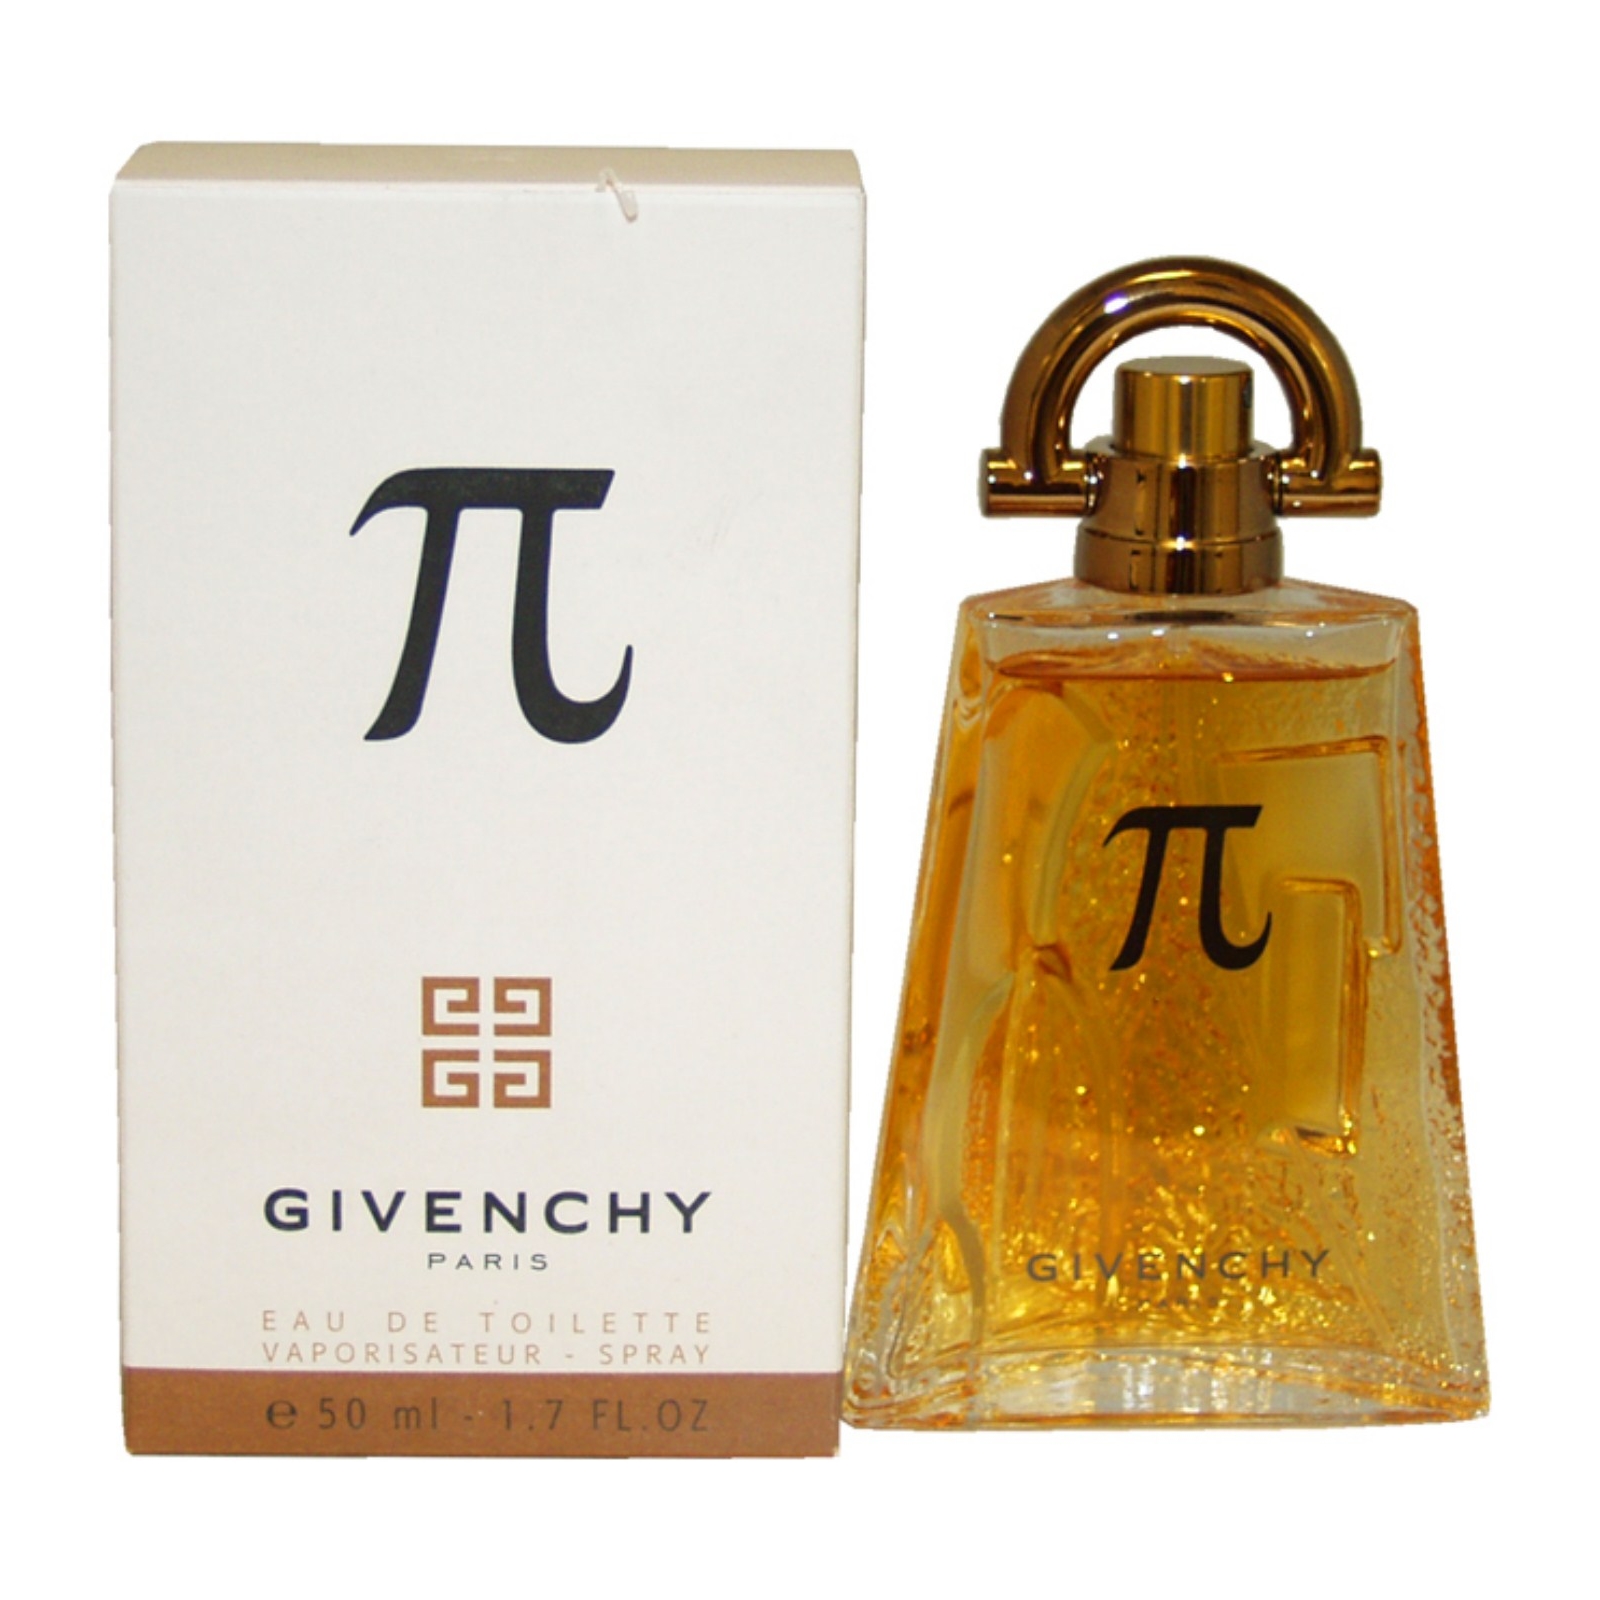 Givenchy PI by  for Men - 1.7 oz EDT Spray